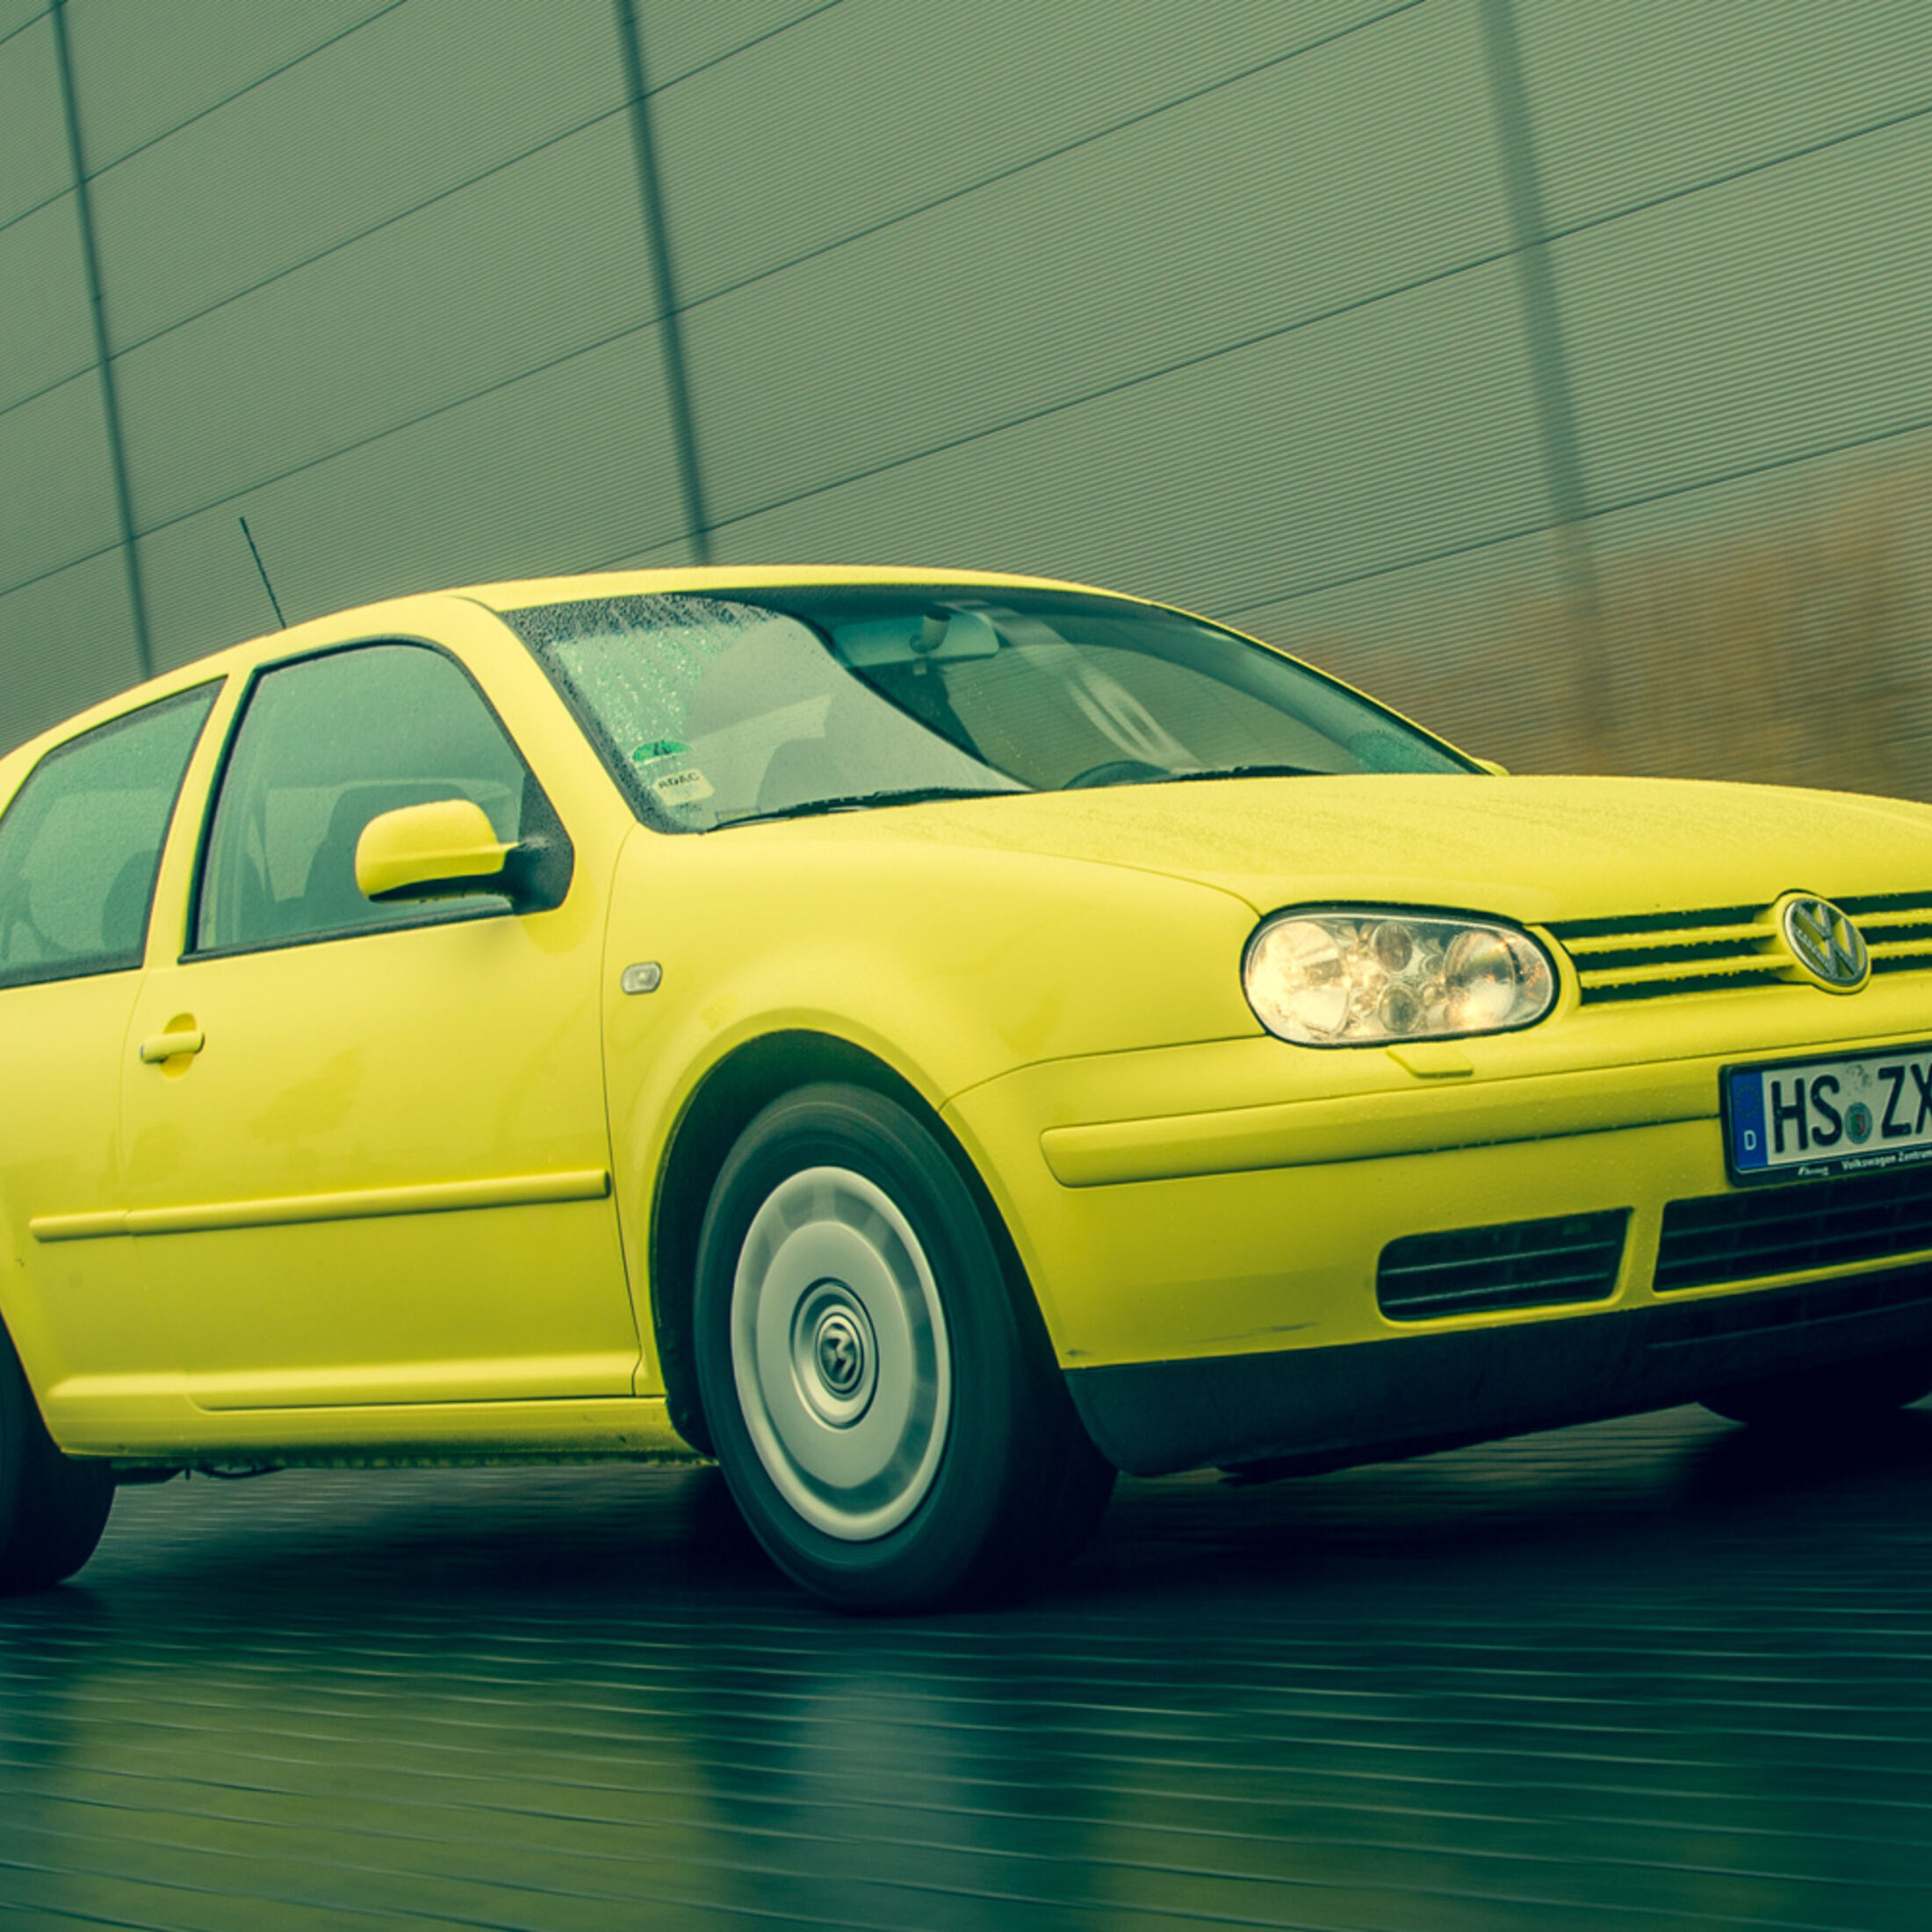 https://imgr1.auto-motor-und-sport.de/Volkswagen-Golf-1-9-TDI-Frontansicht-jsonLd1x1-c413de85-852619.jpg